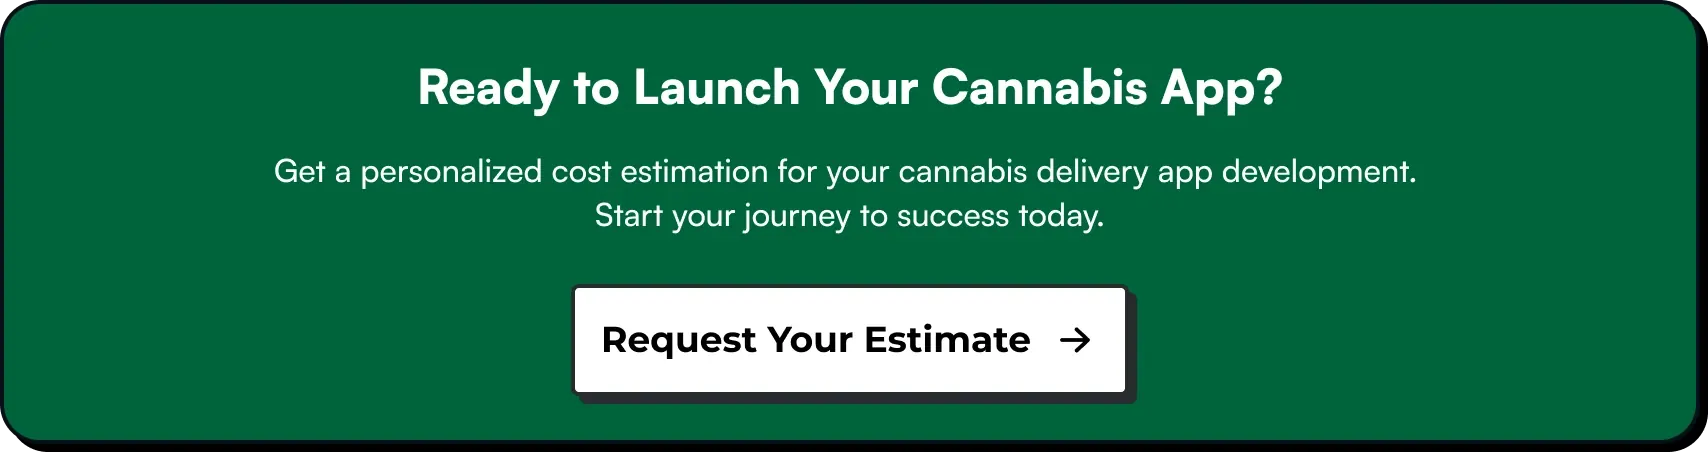 Get the cannabis app development cost estimation